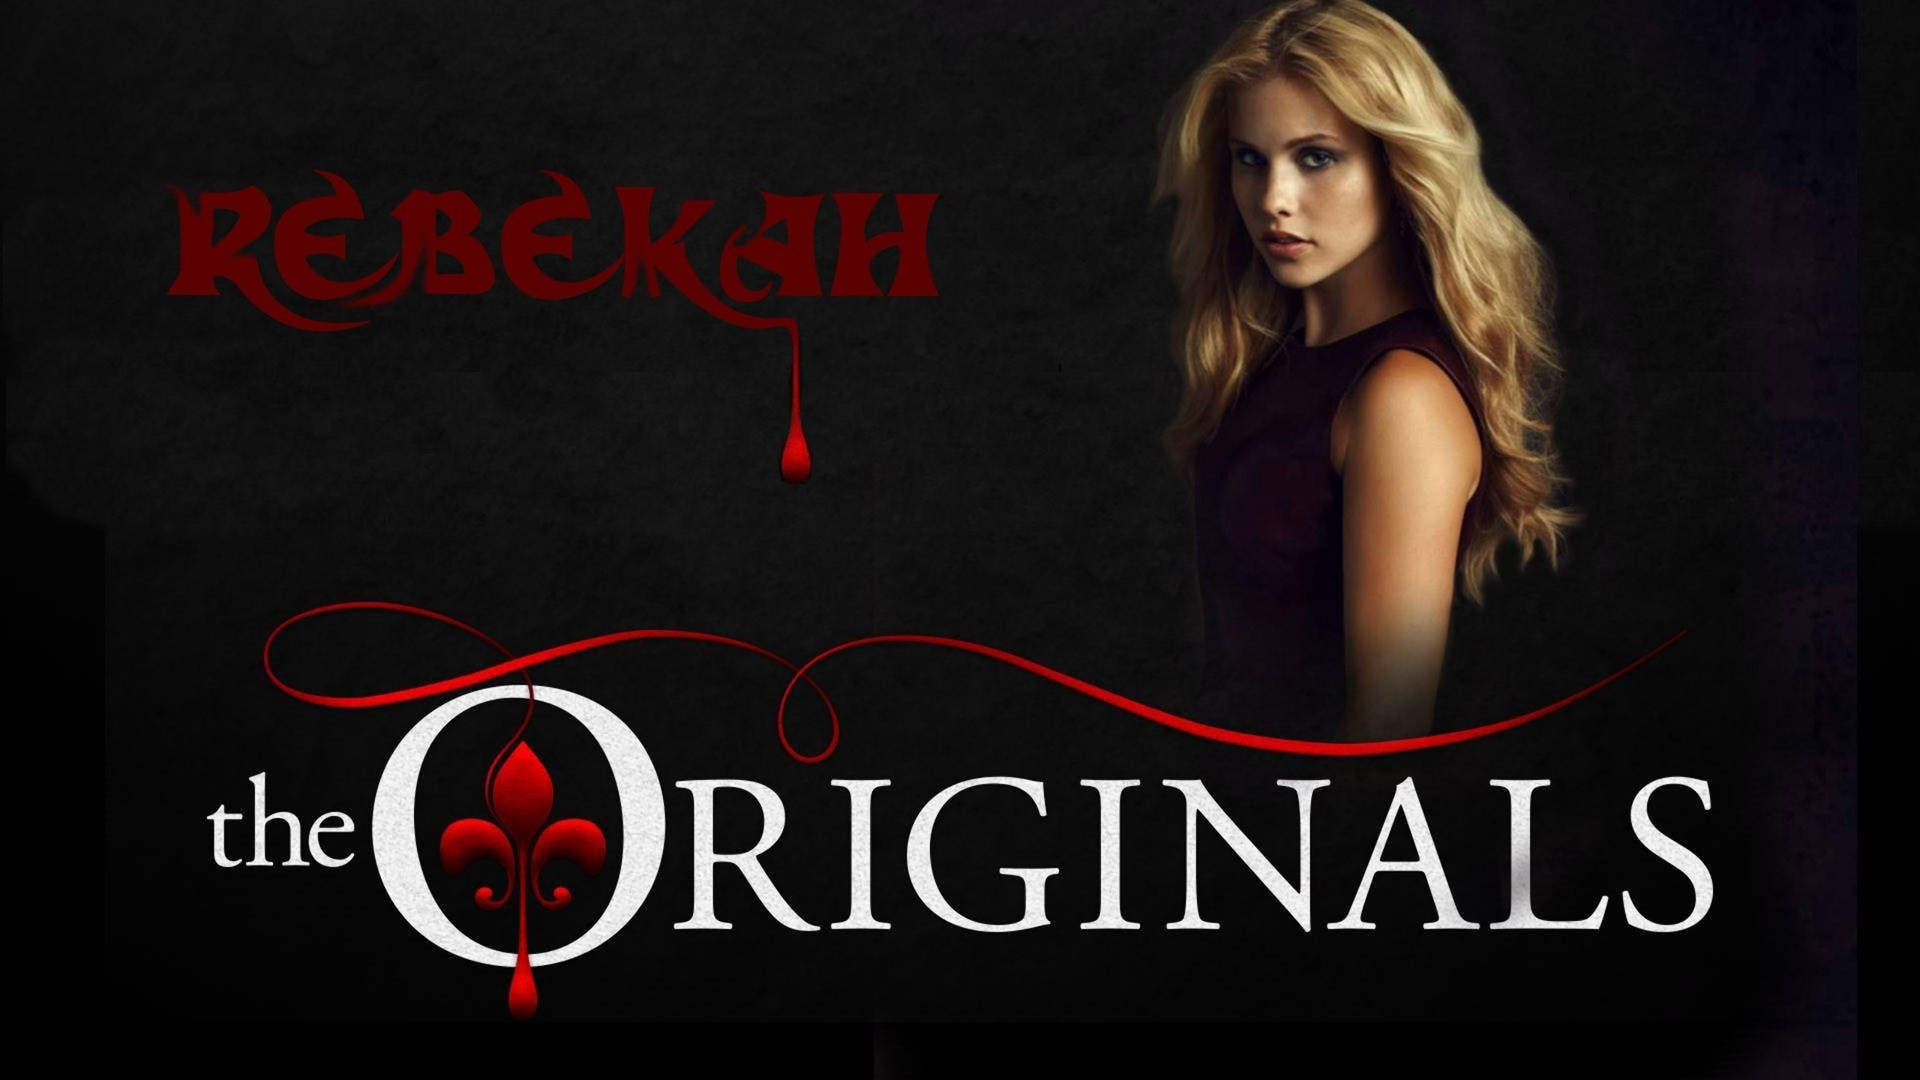 The Originals Rebekah Cover Background